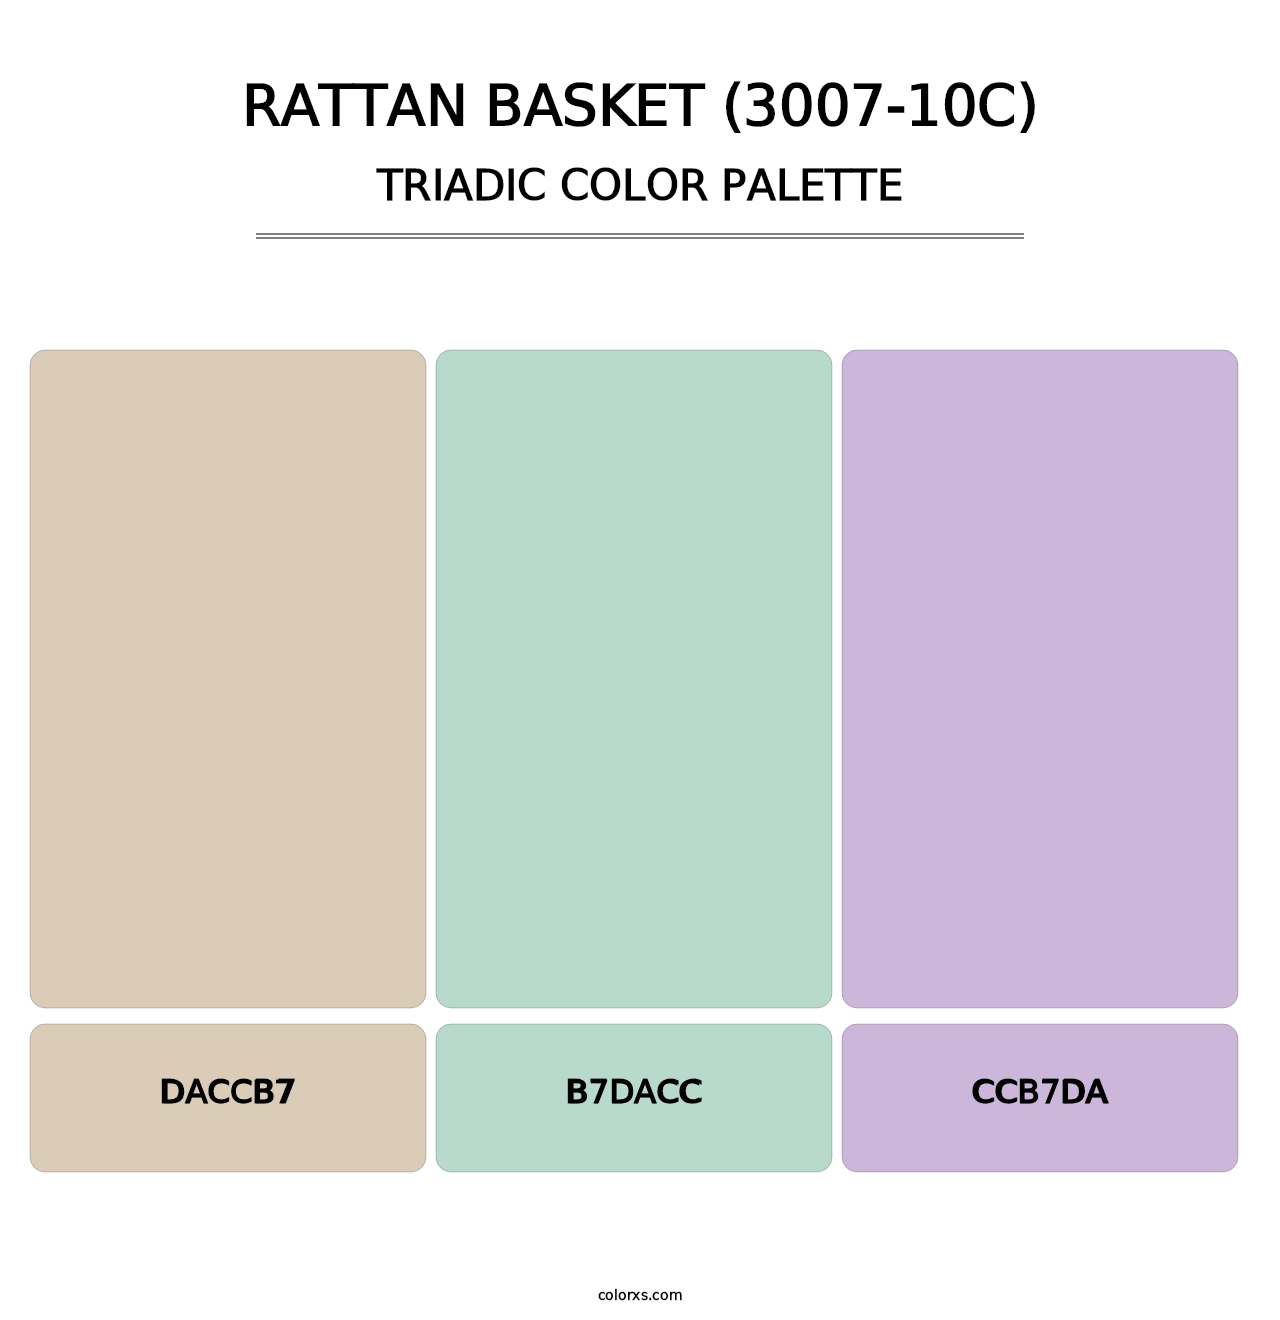 Rattan Basket (3007-10C) - Triadic Color Palette